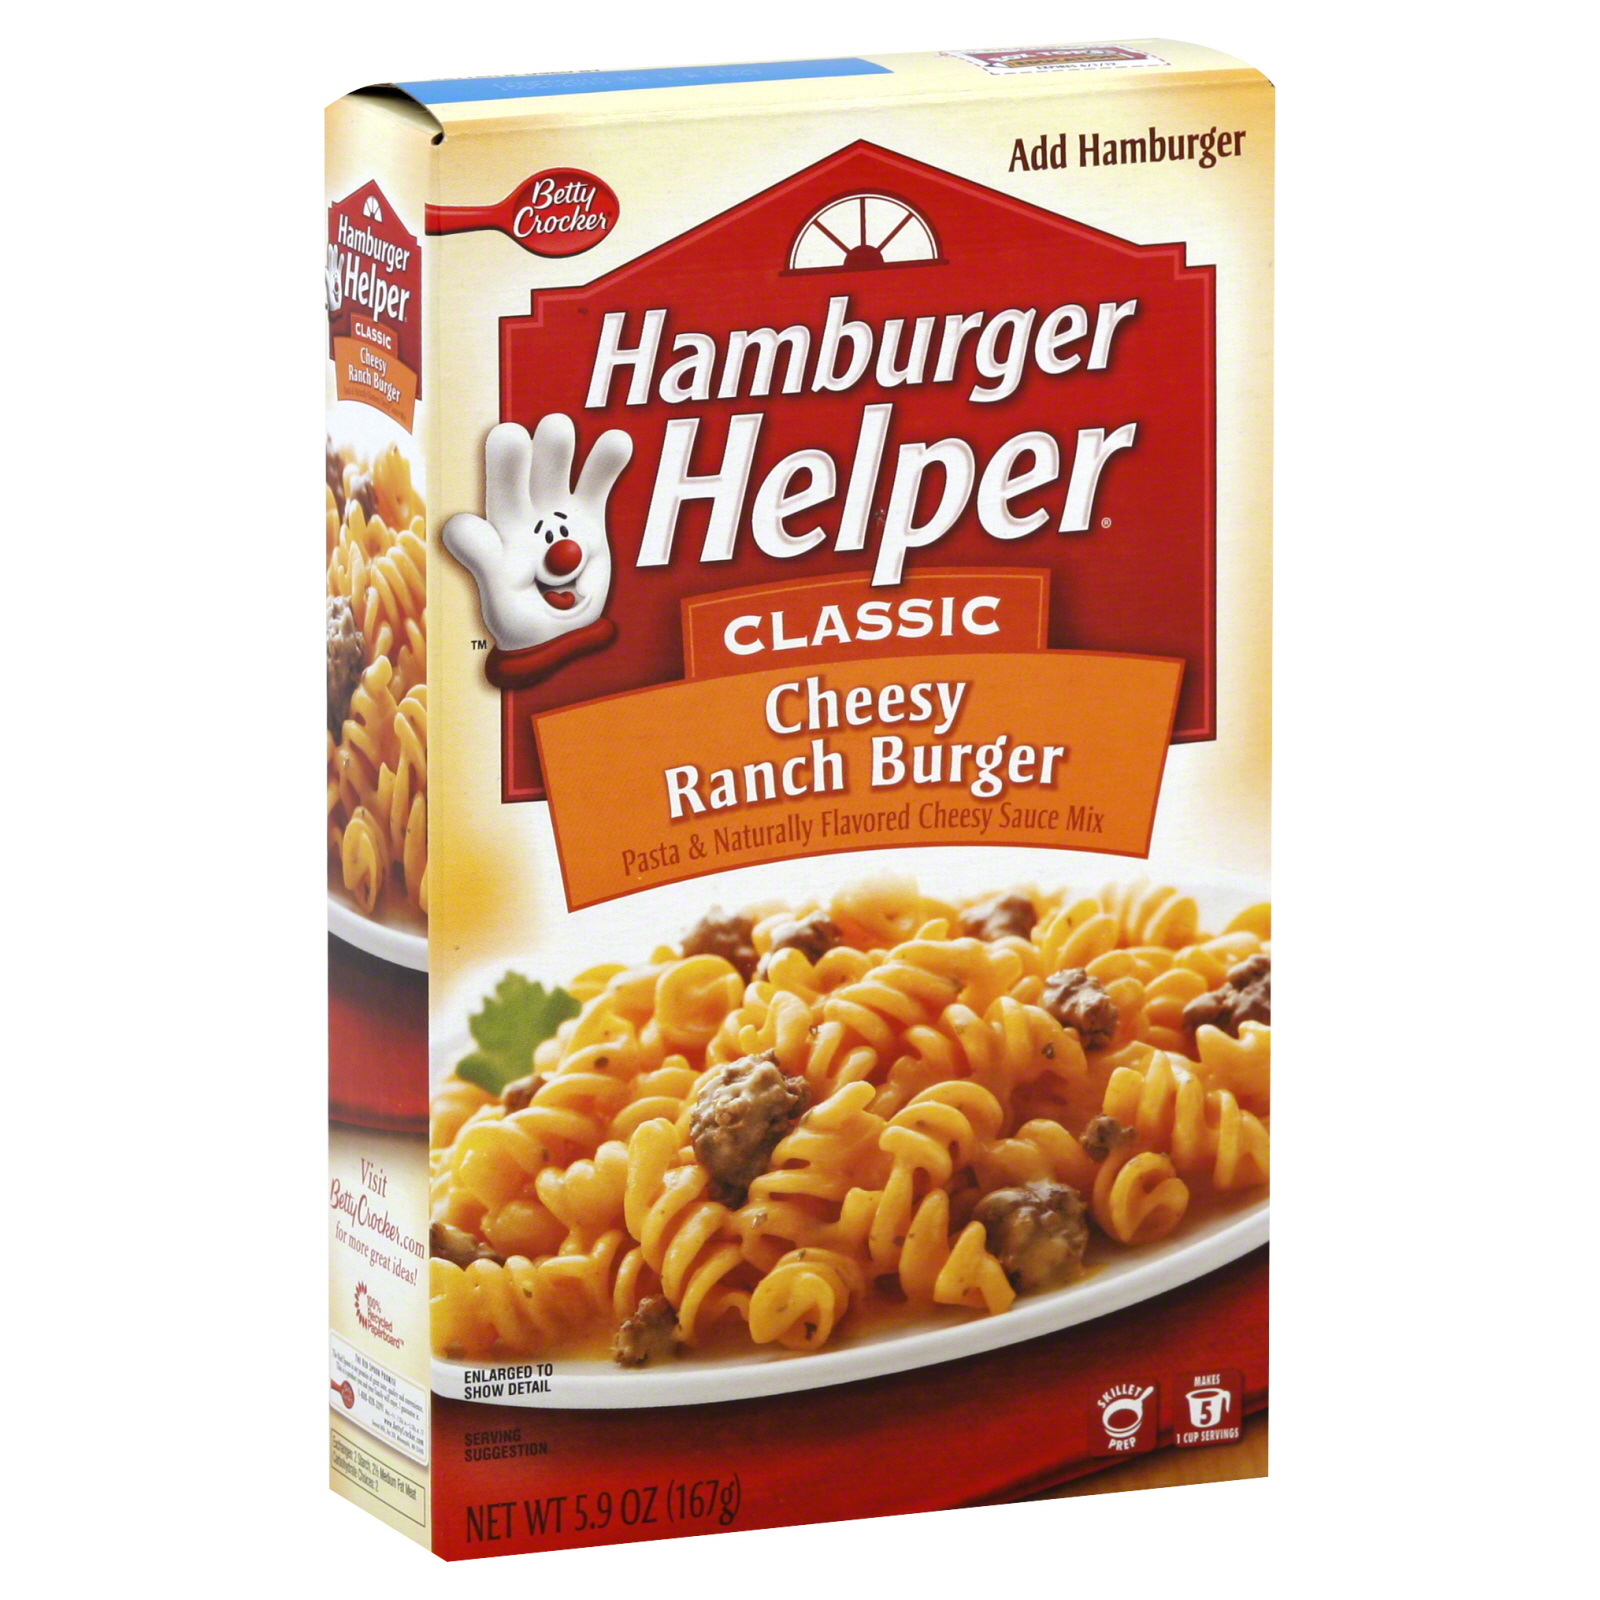 Hamburger Helper Classic Pasta & Sauce Mix, Cheesy Ranch Burger, 5.9 oz (167 g)